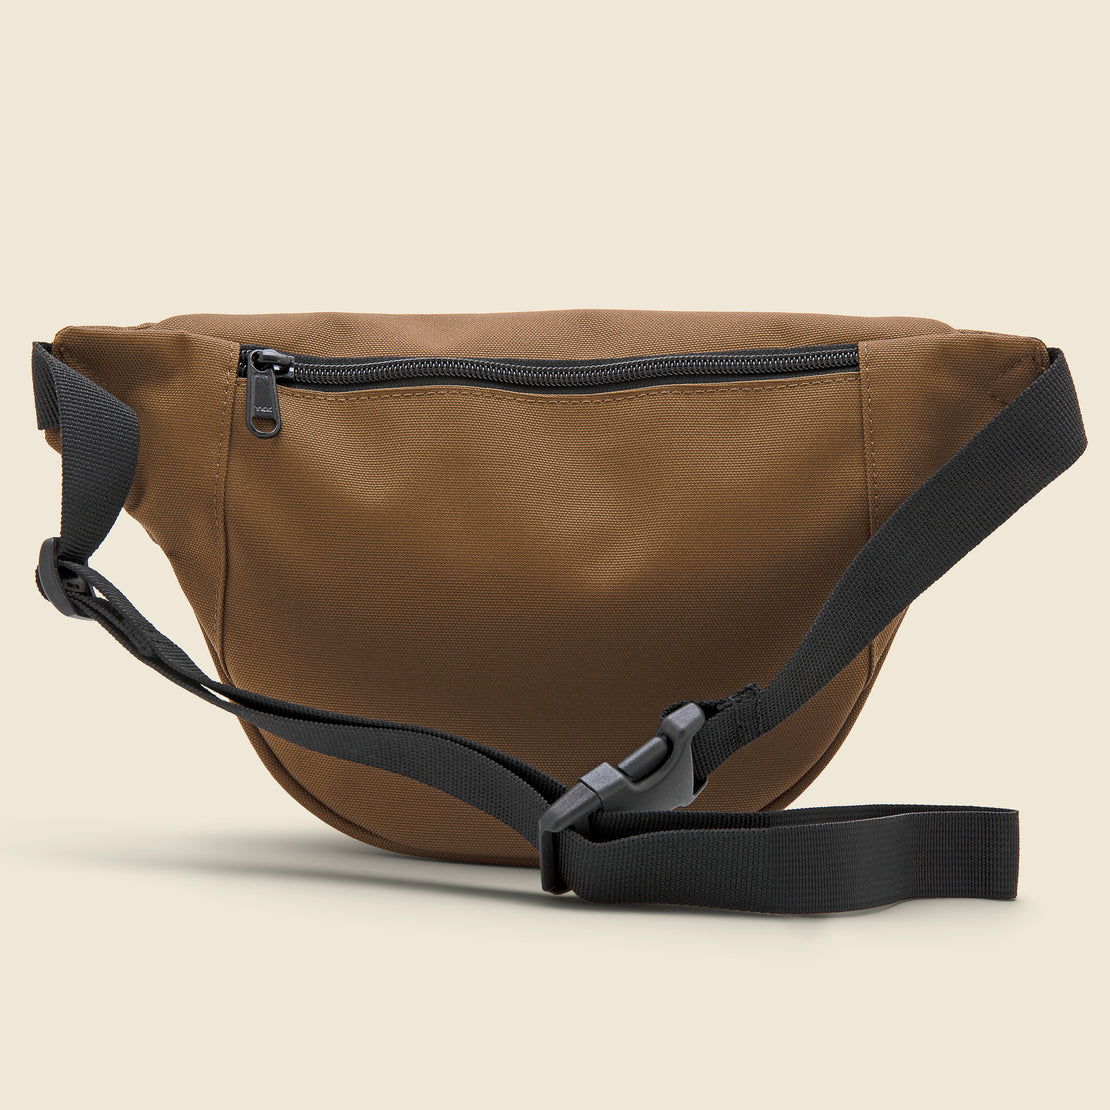 Jake Hip Bag - Tamarind - Carhartt WIP - STAG Provisions - Accessories - Bags / Luggage